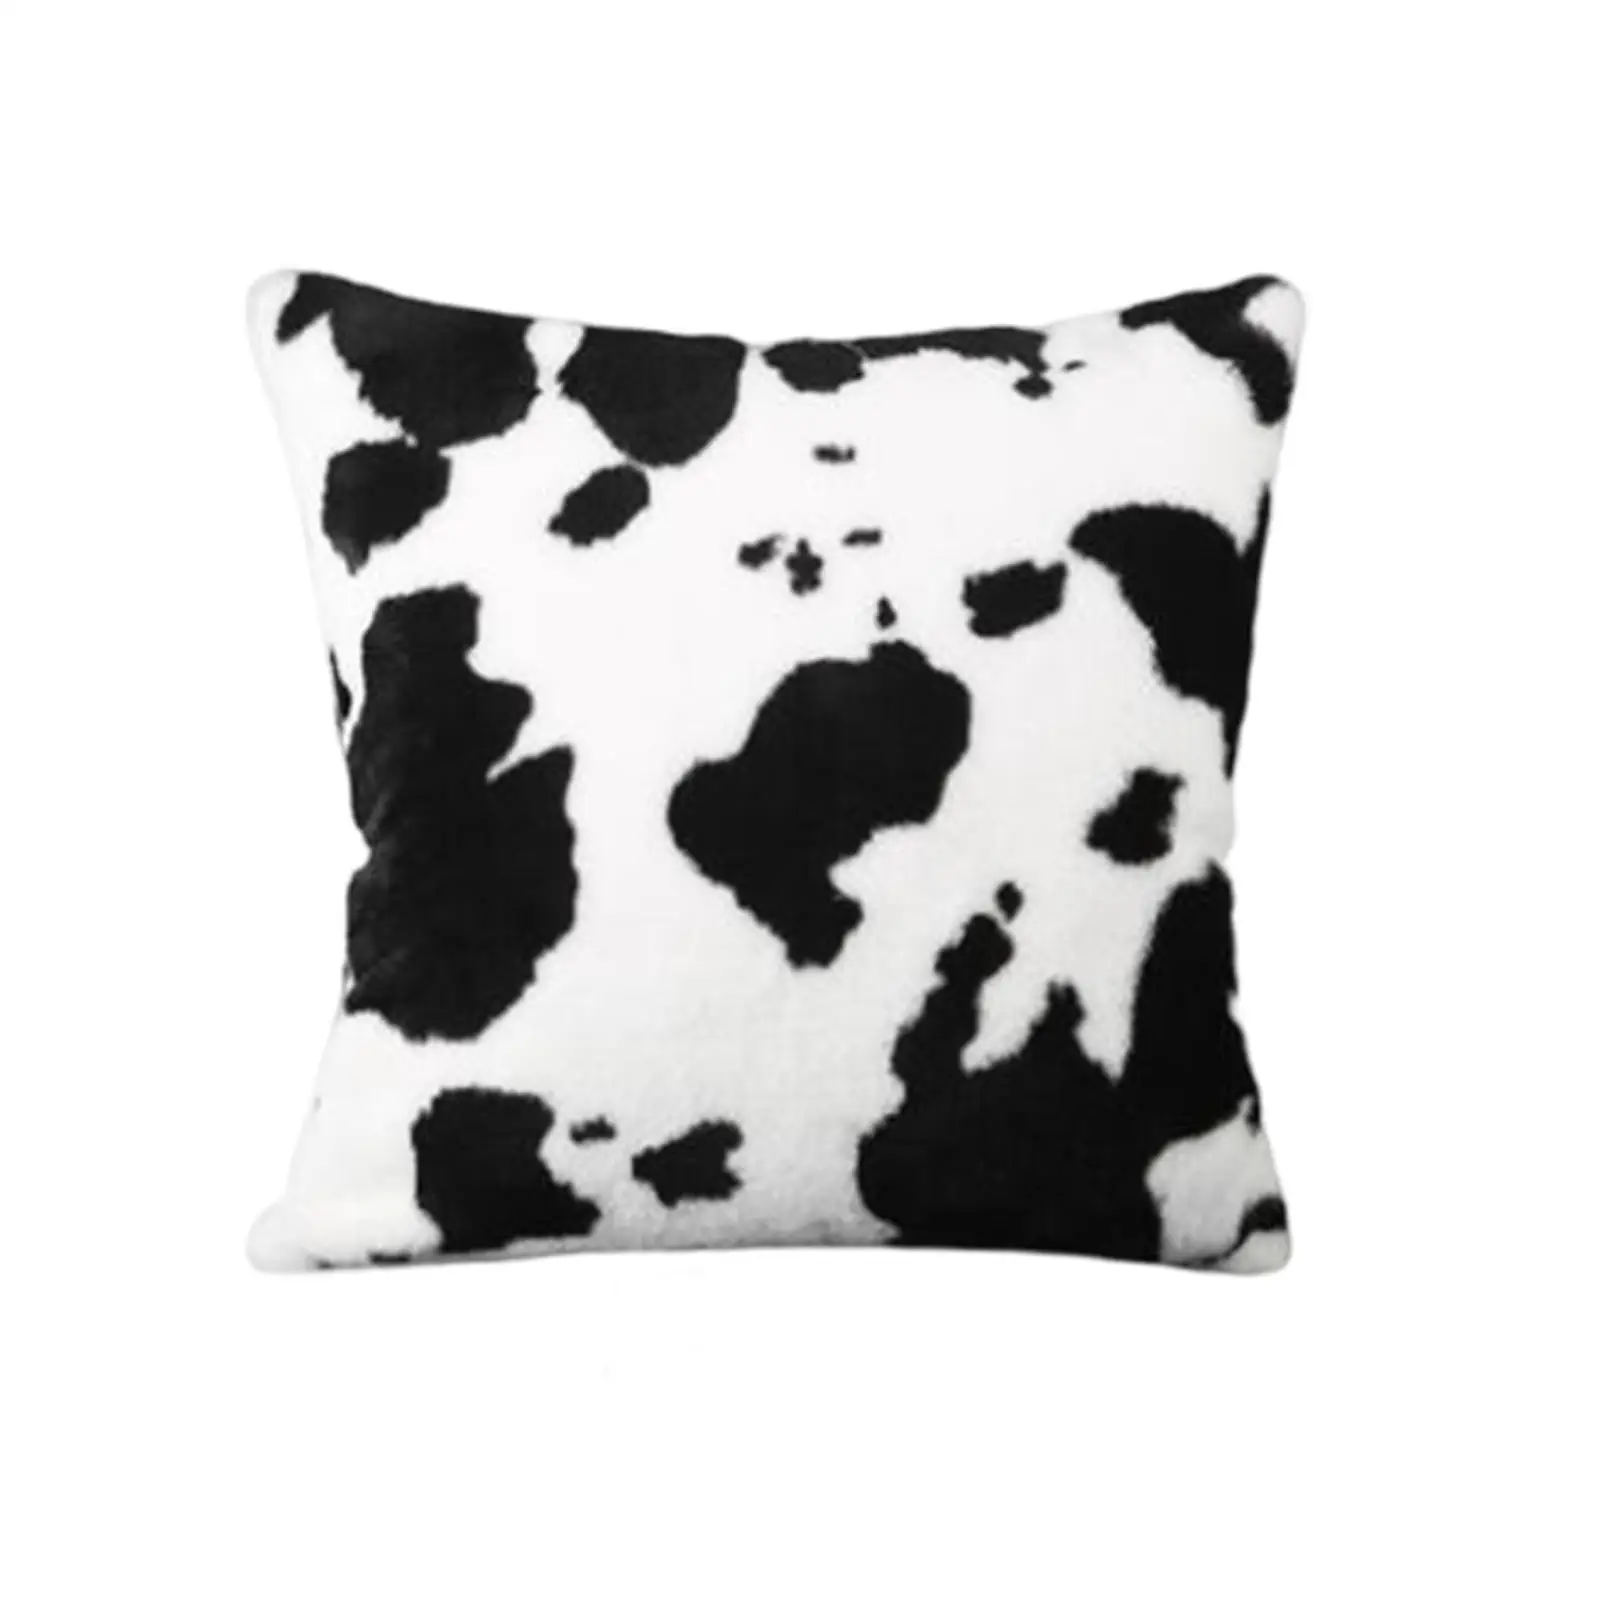 Cow Spots Pattern 45x45cm Throw Pillow Cases Coffee Shop Decoration for Sofa Couch Decorative Durable Zipper Closure Soft